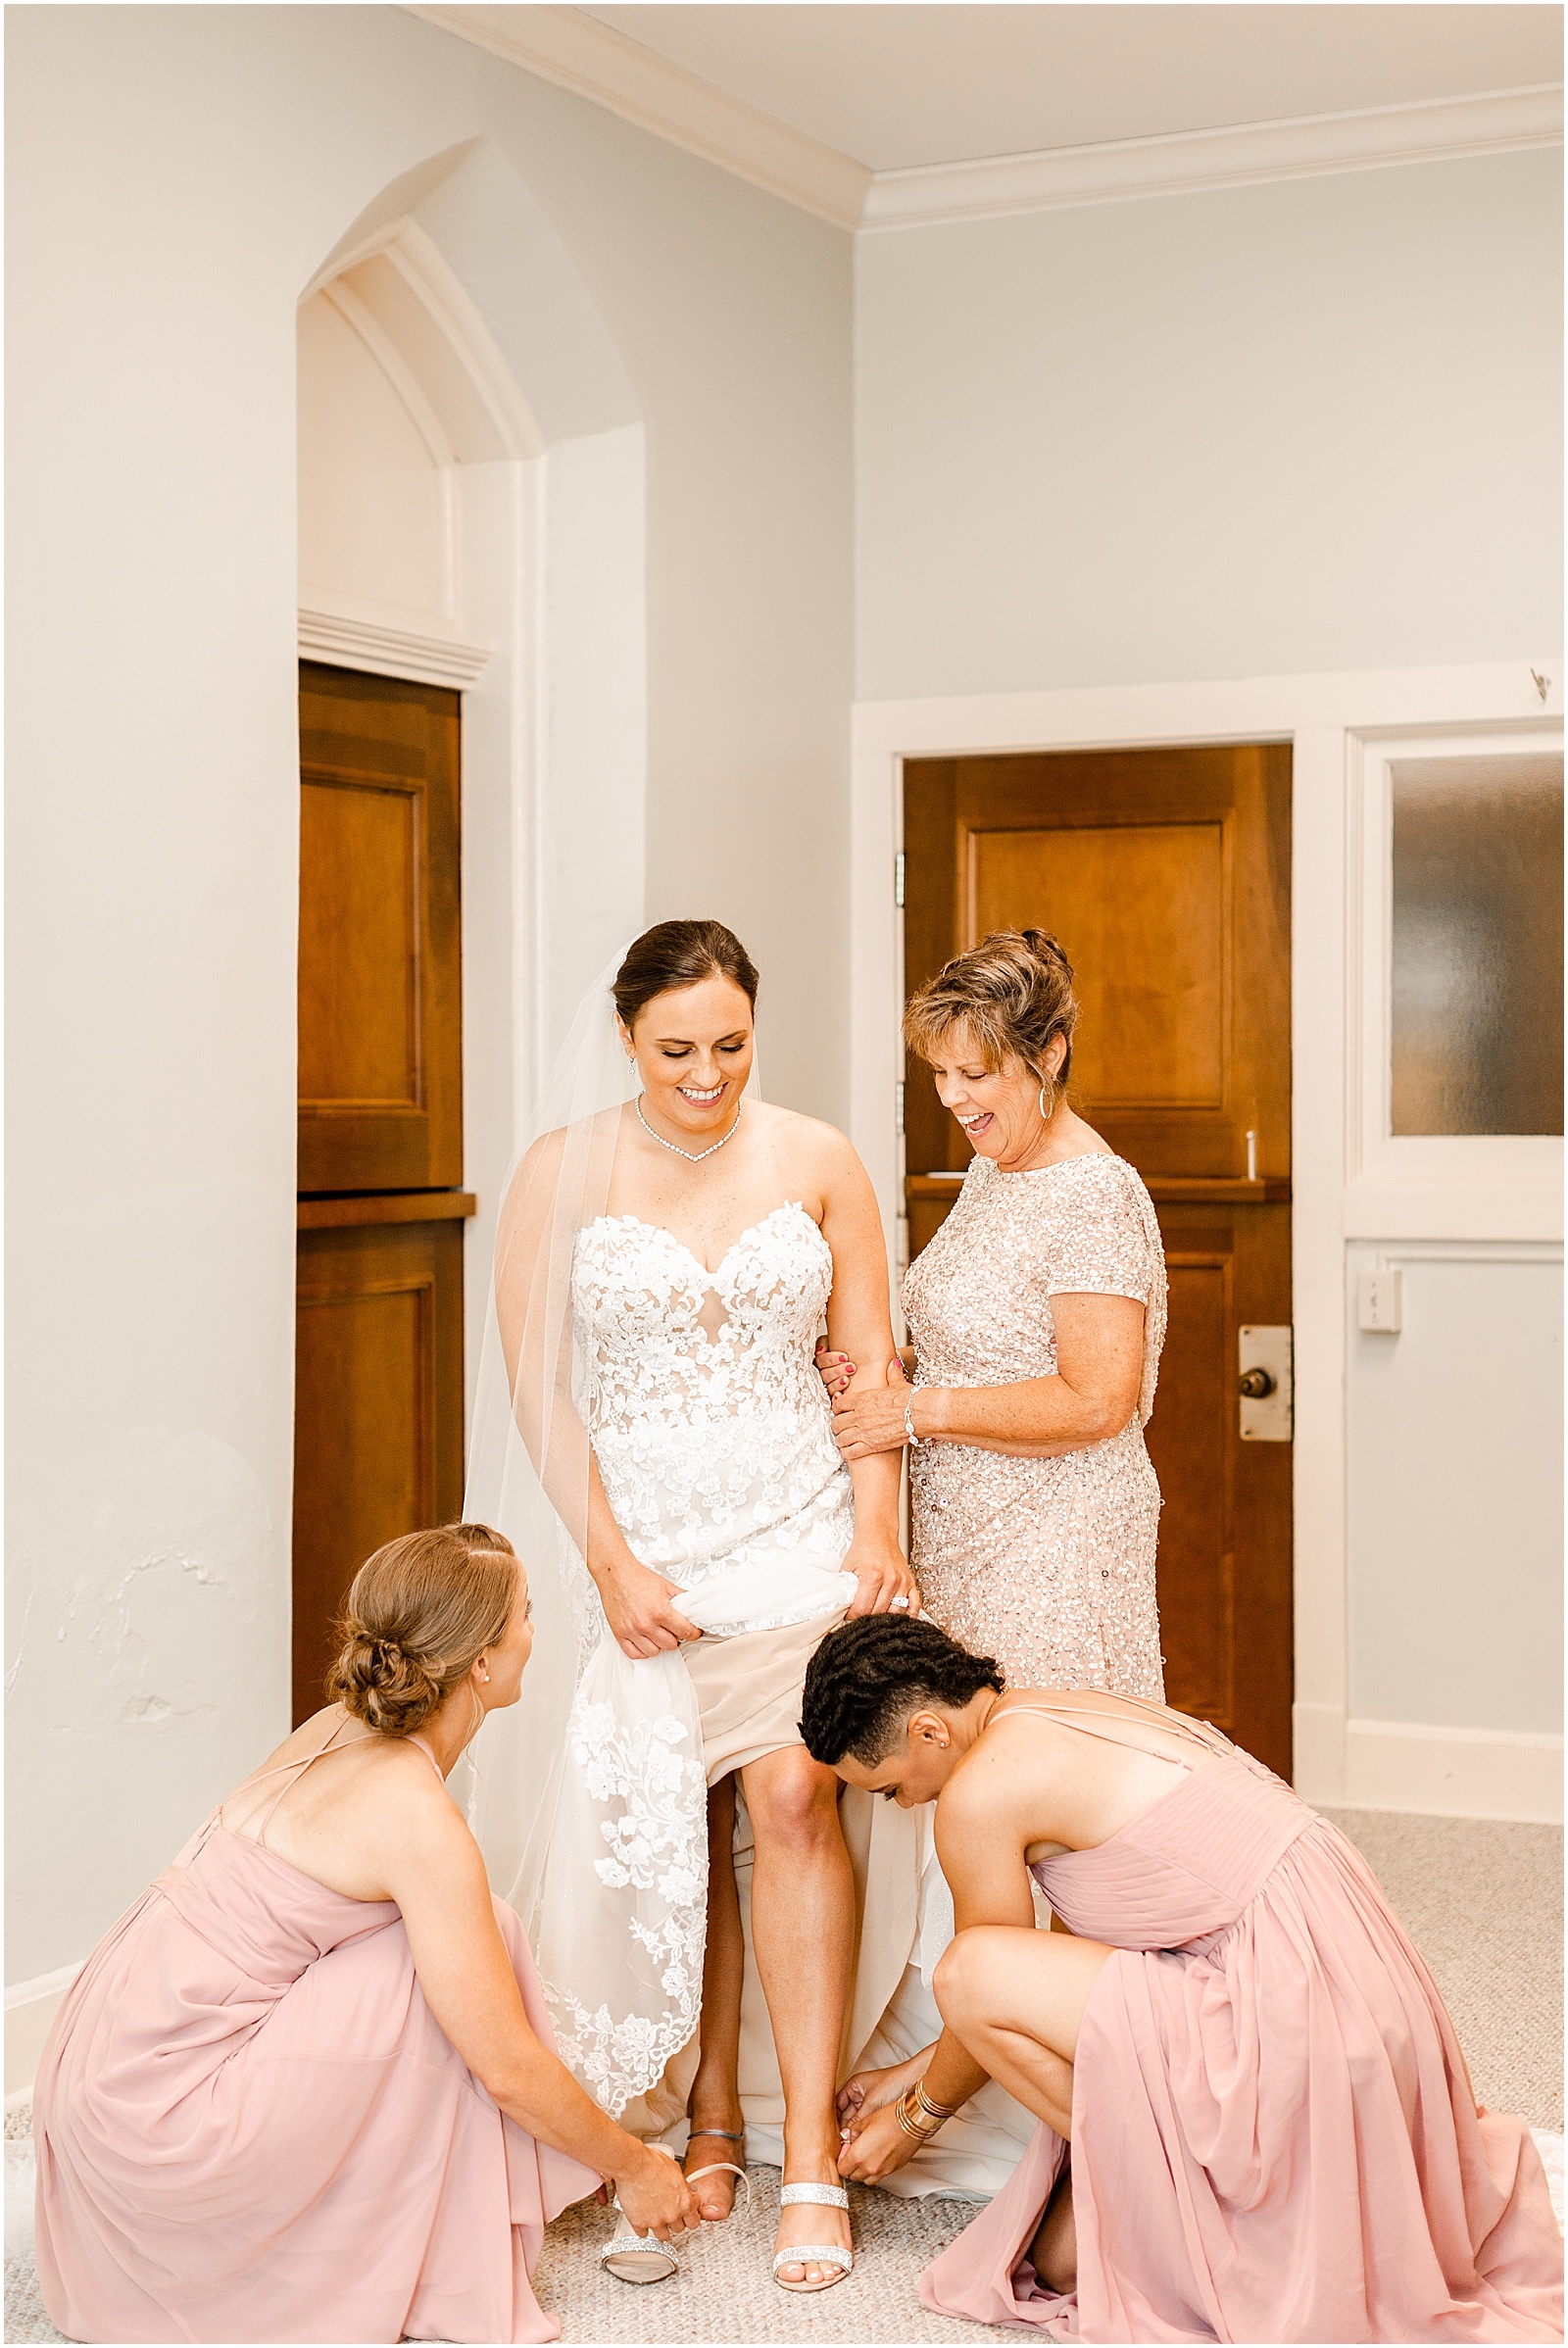 Deidra and Andrew | A Huntingburgh Indiana Wedding Bret and Brandie | Evansville Photographers | @bretandbrandie-0017.jpg